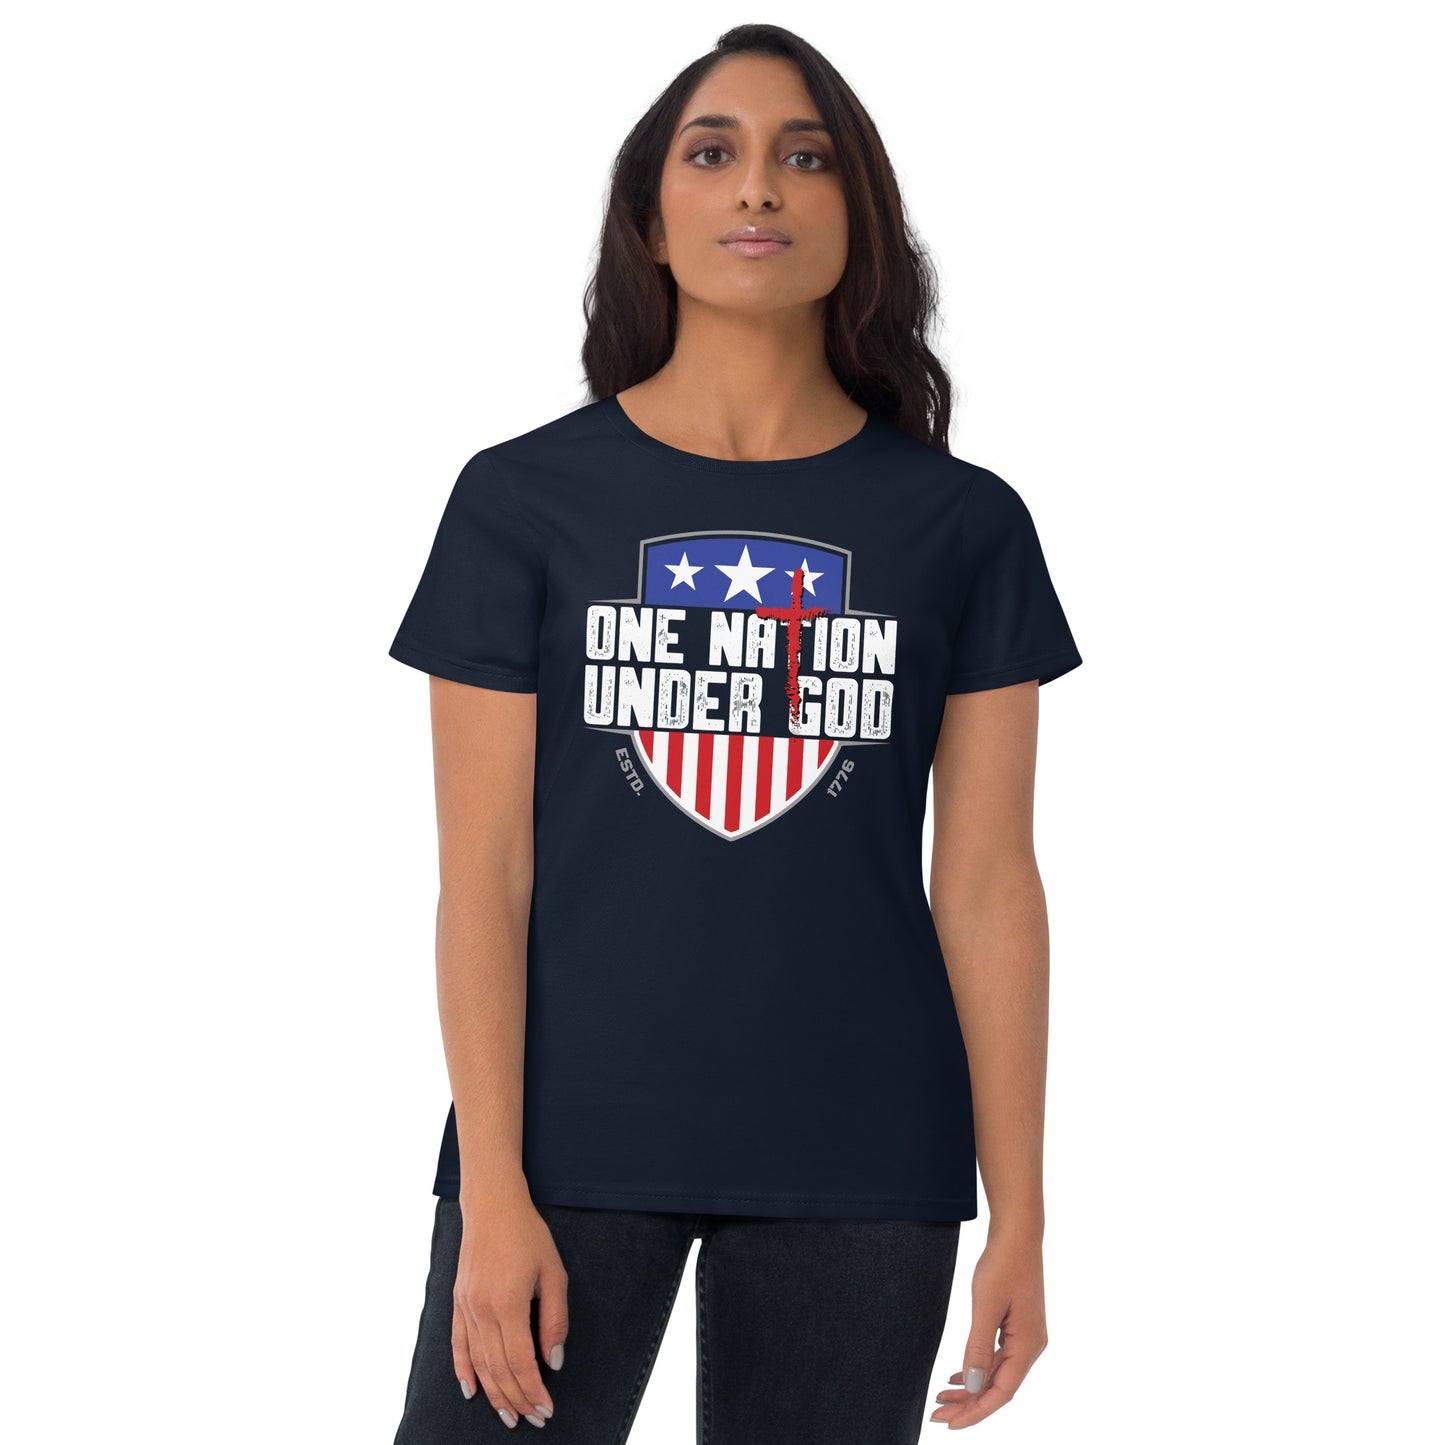 One Nation Under God - Women's short sleeve t-shirt